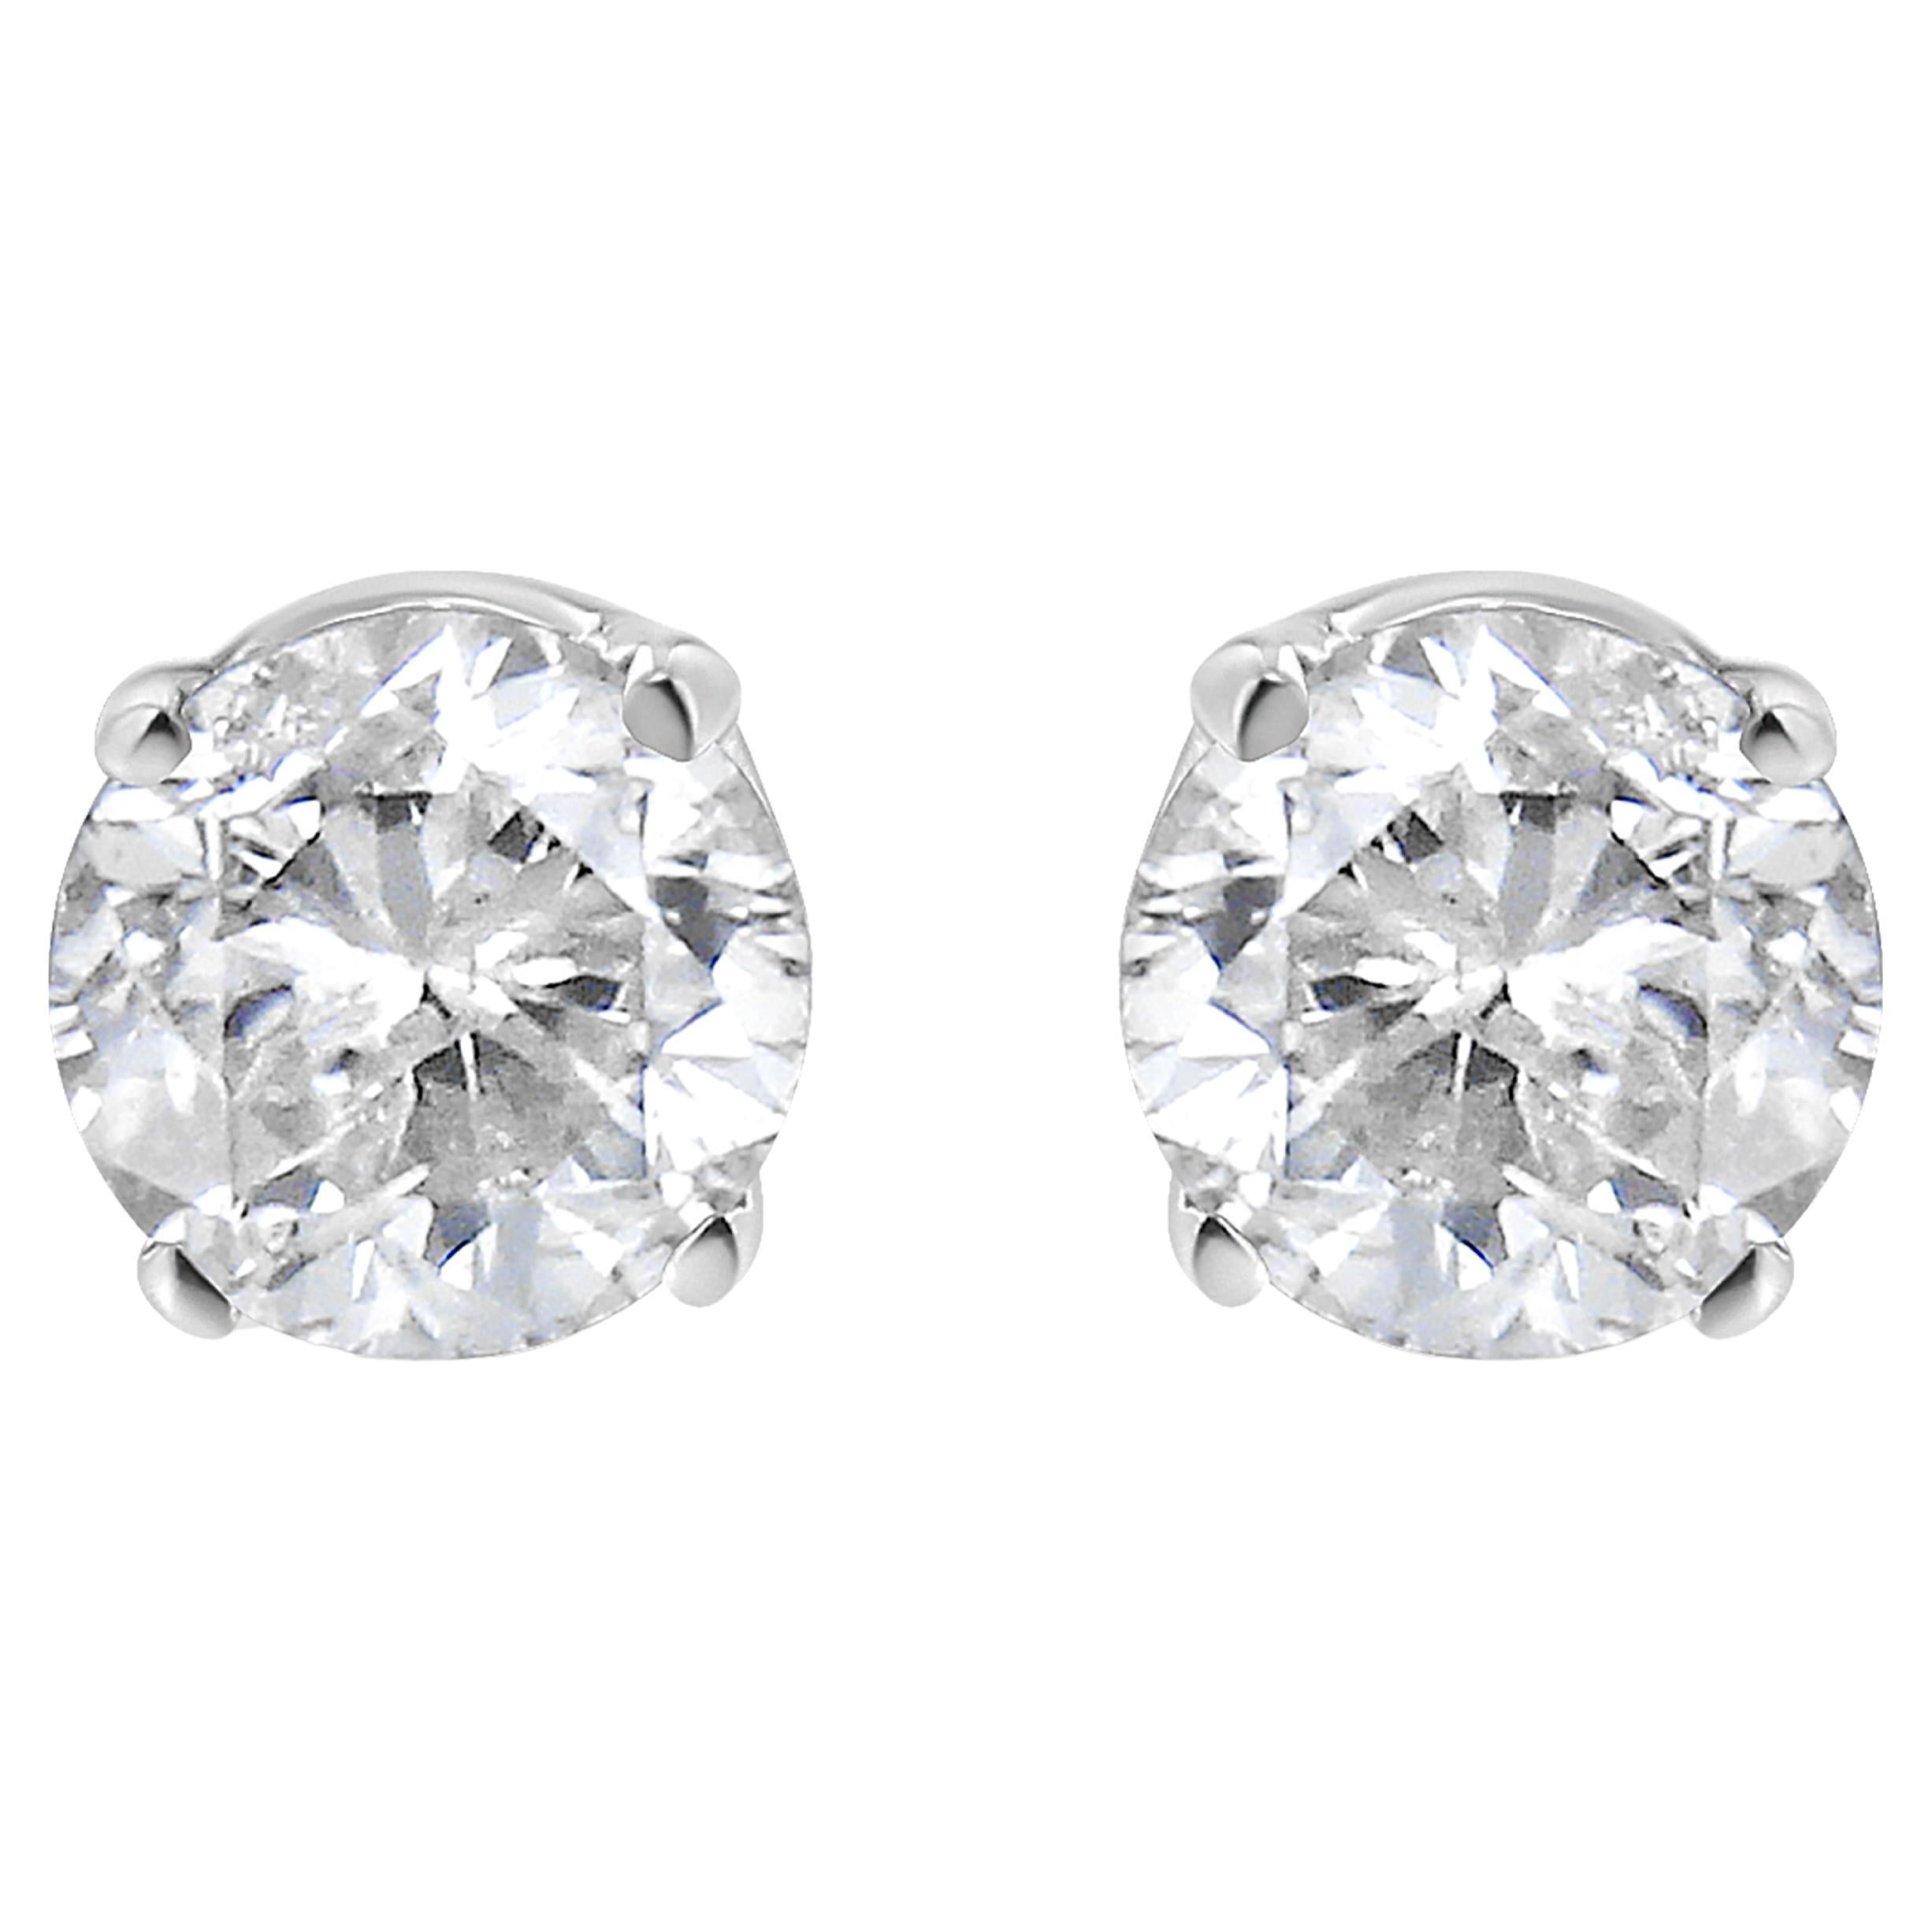 AGS Certified 14K White Gold 1.0 Carat Round-Cut Diamond Push Back Stud Earrings